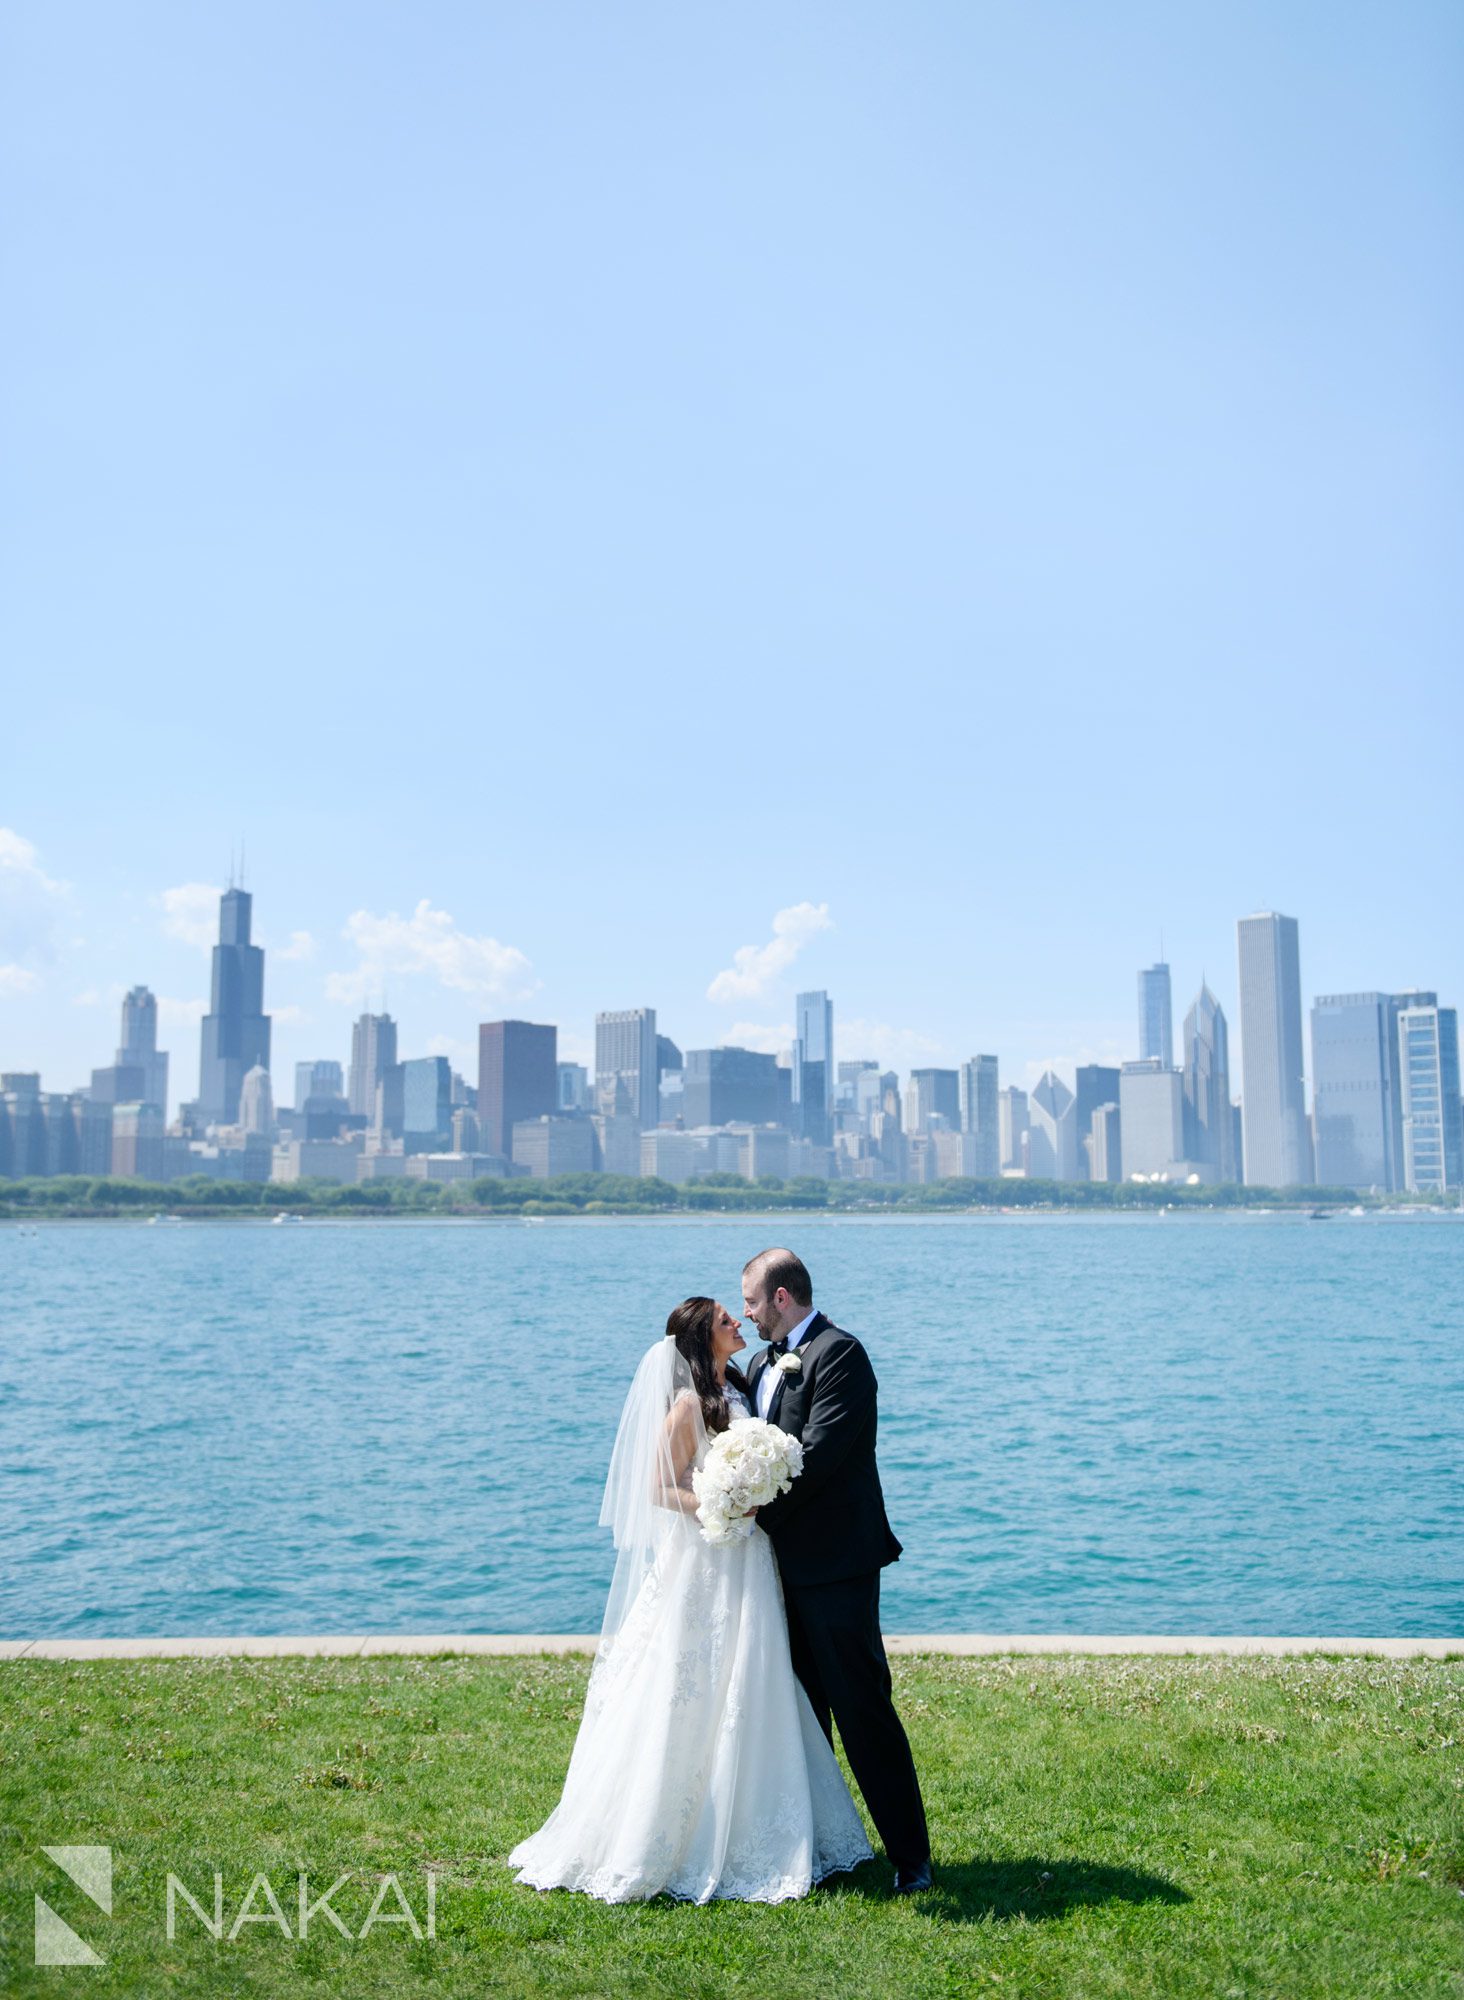 Chicago wedding photography locations skyline